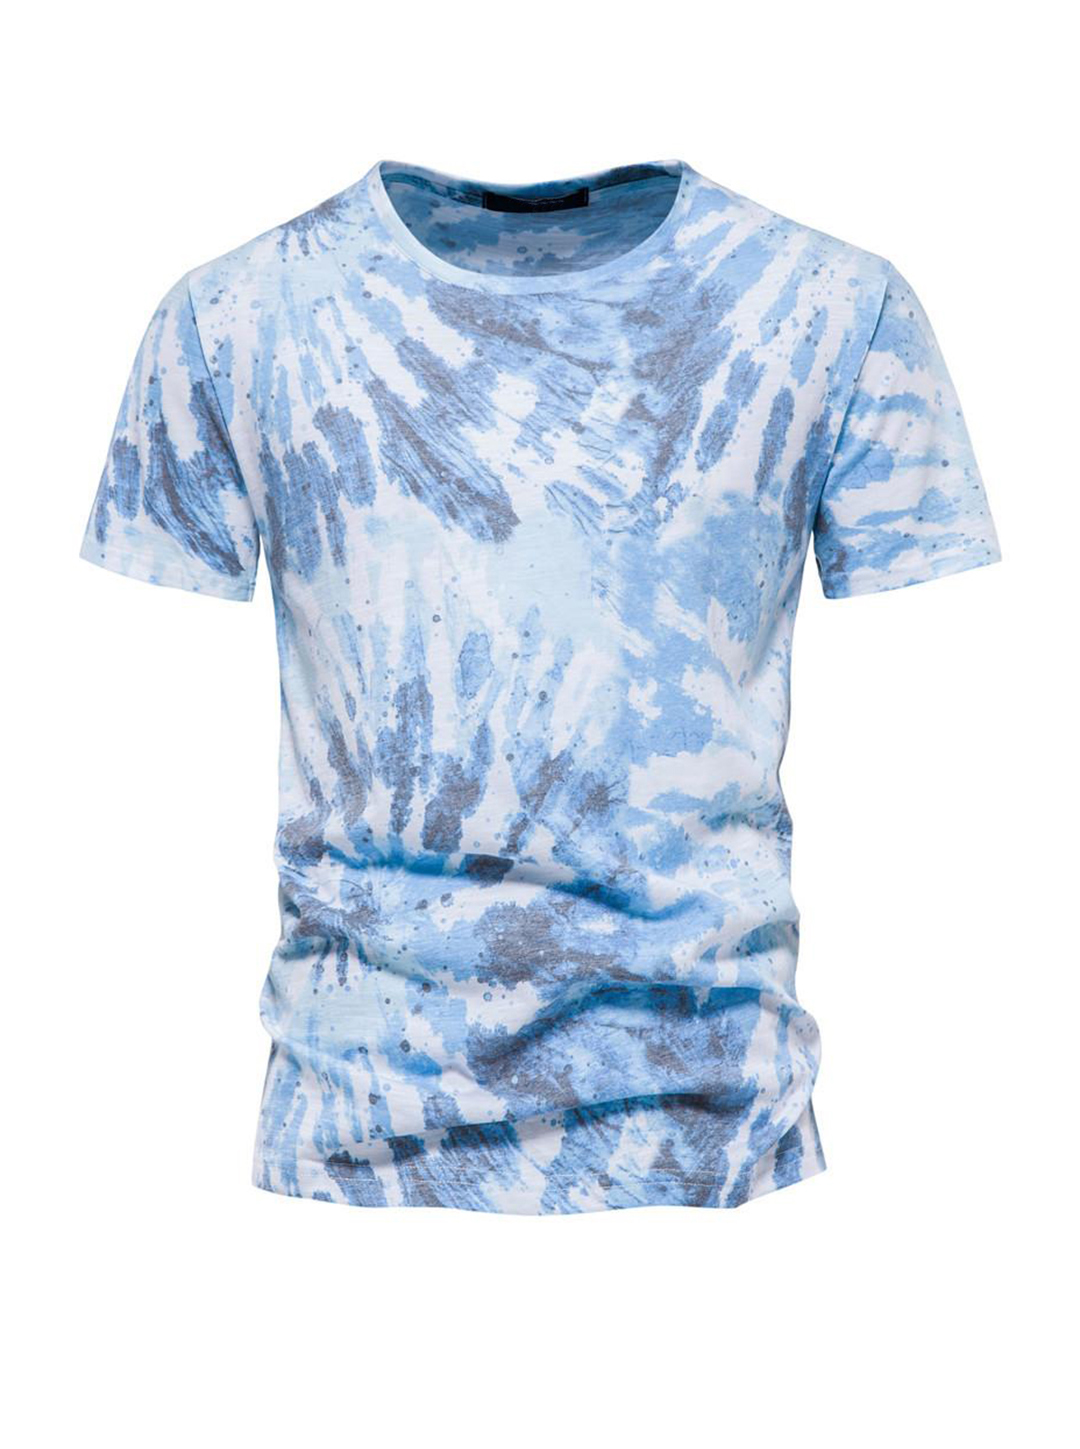 Klein Tie-Dye Print Resort Short Sleeve T-Shirt